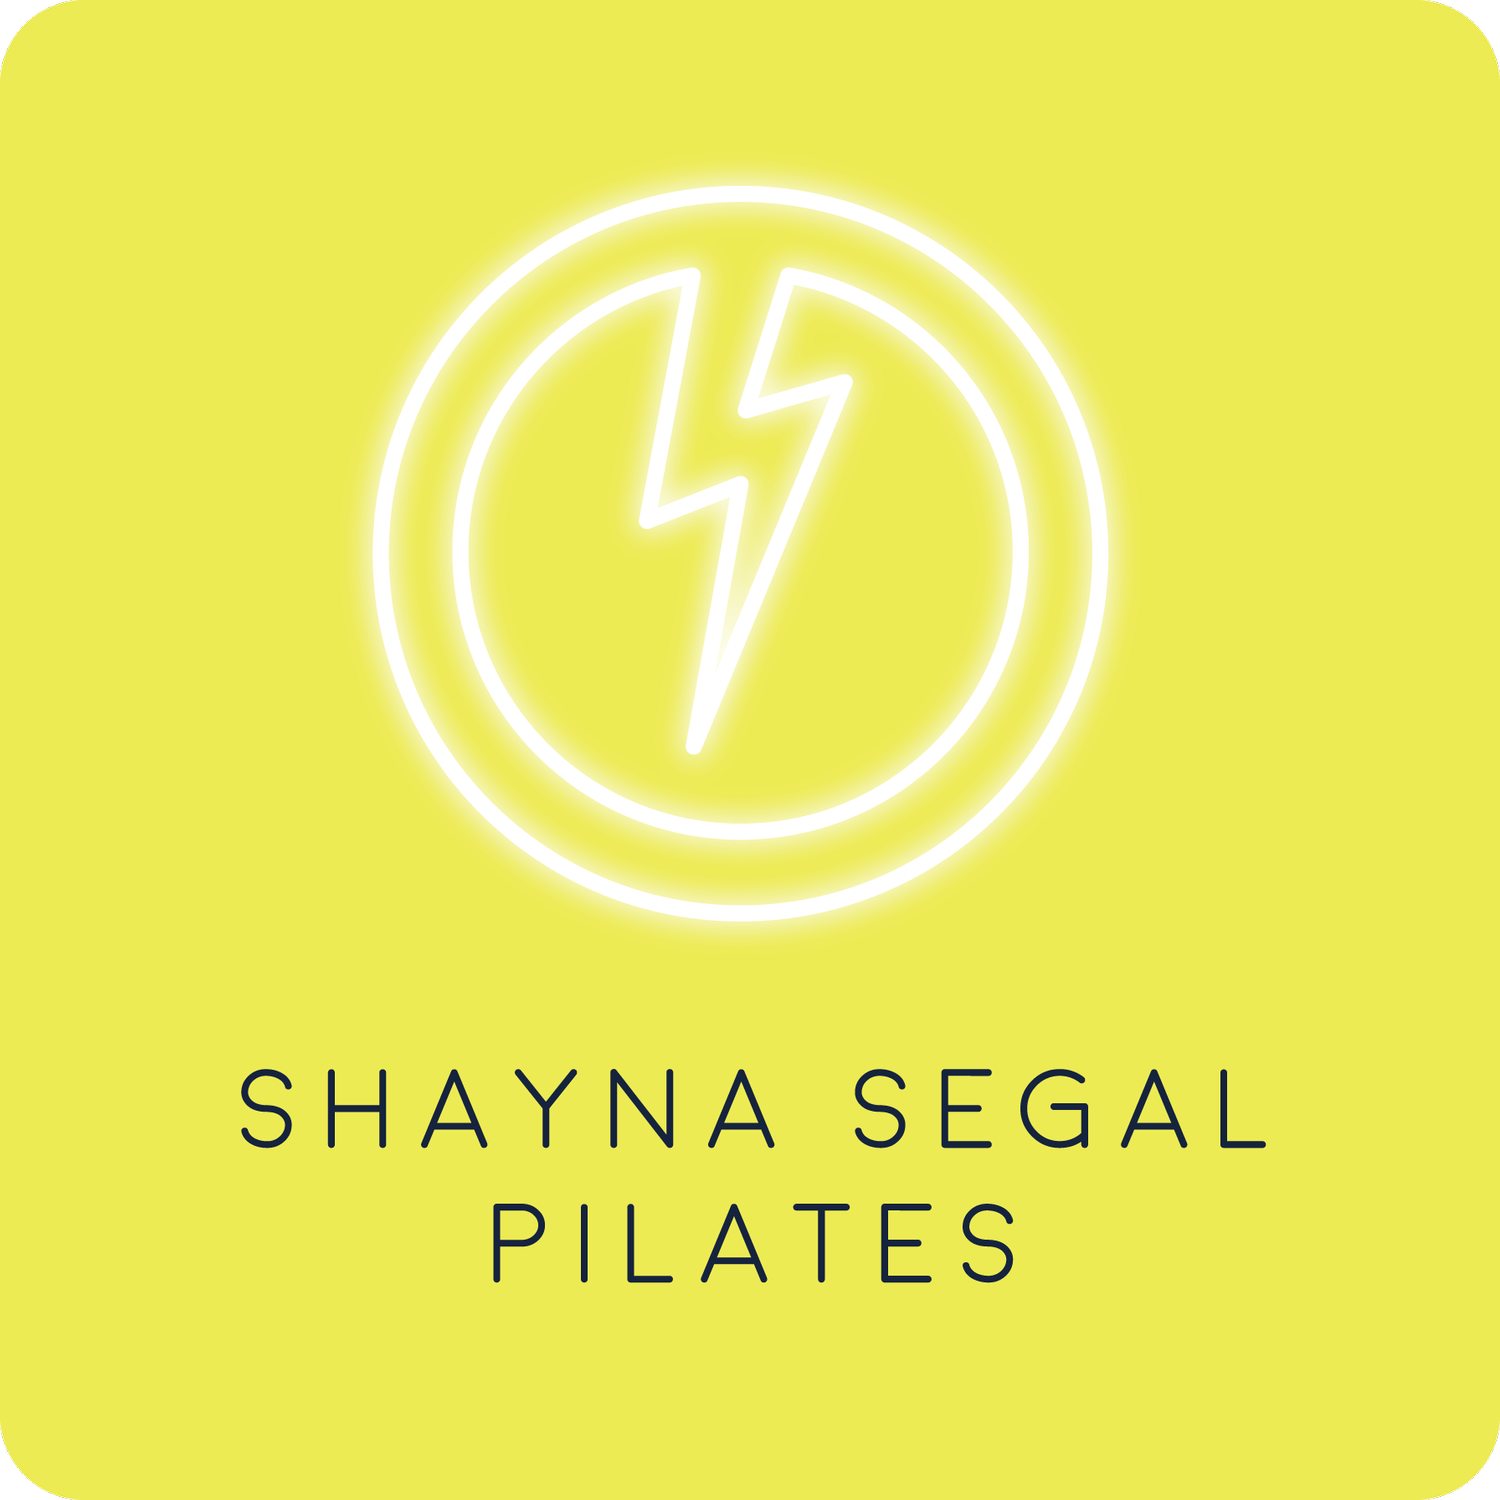 Shayna Segal Pilates